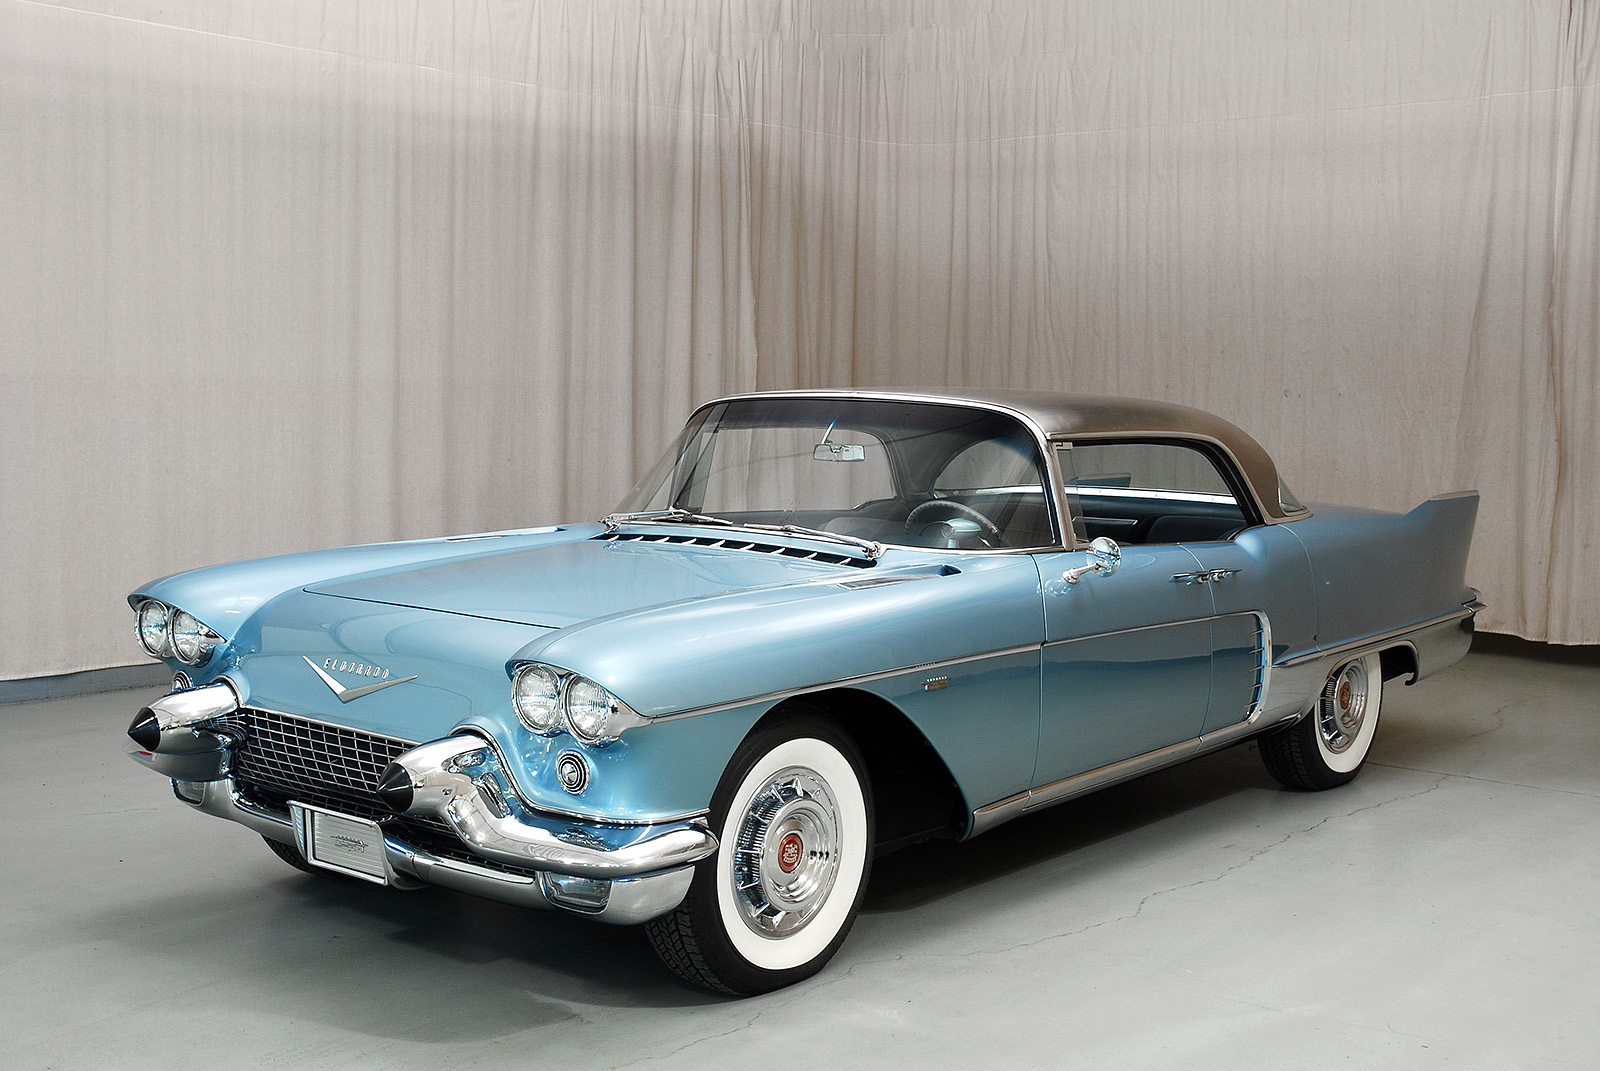 Amazing 1958 Cadillac Eldorado Brougham Pictures & Backgrounds